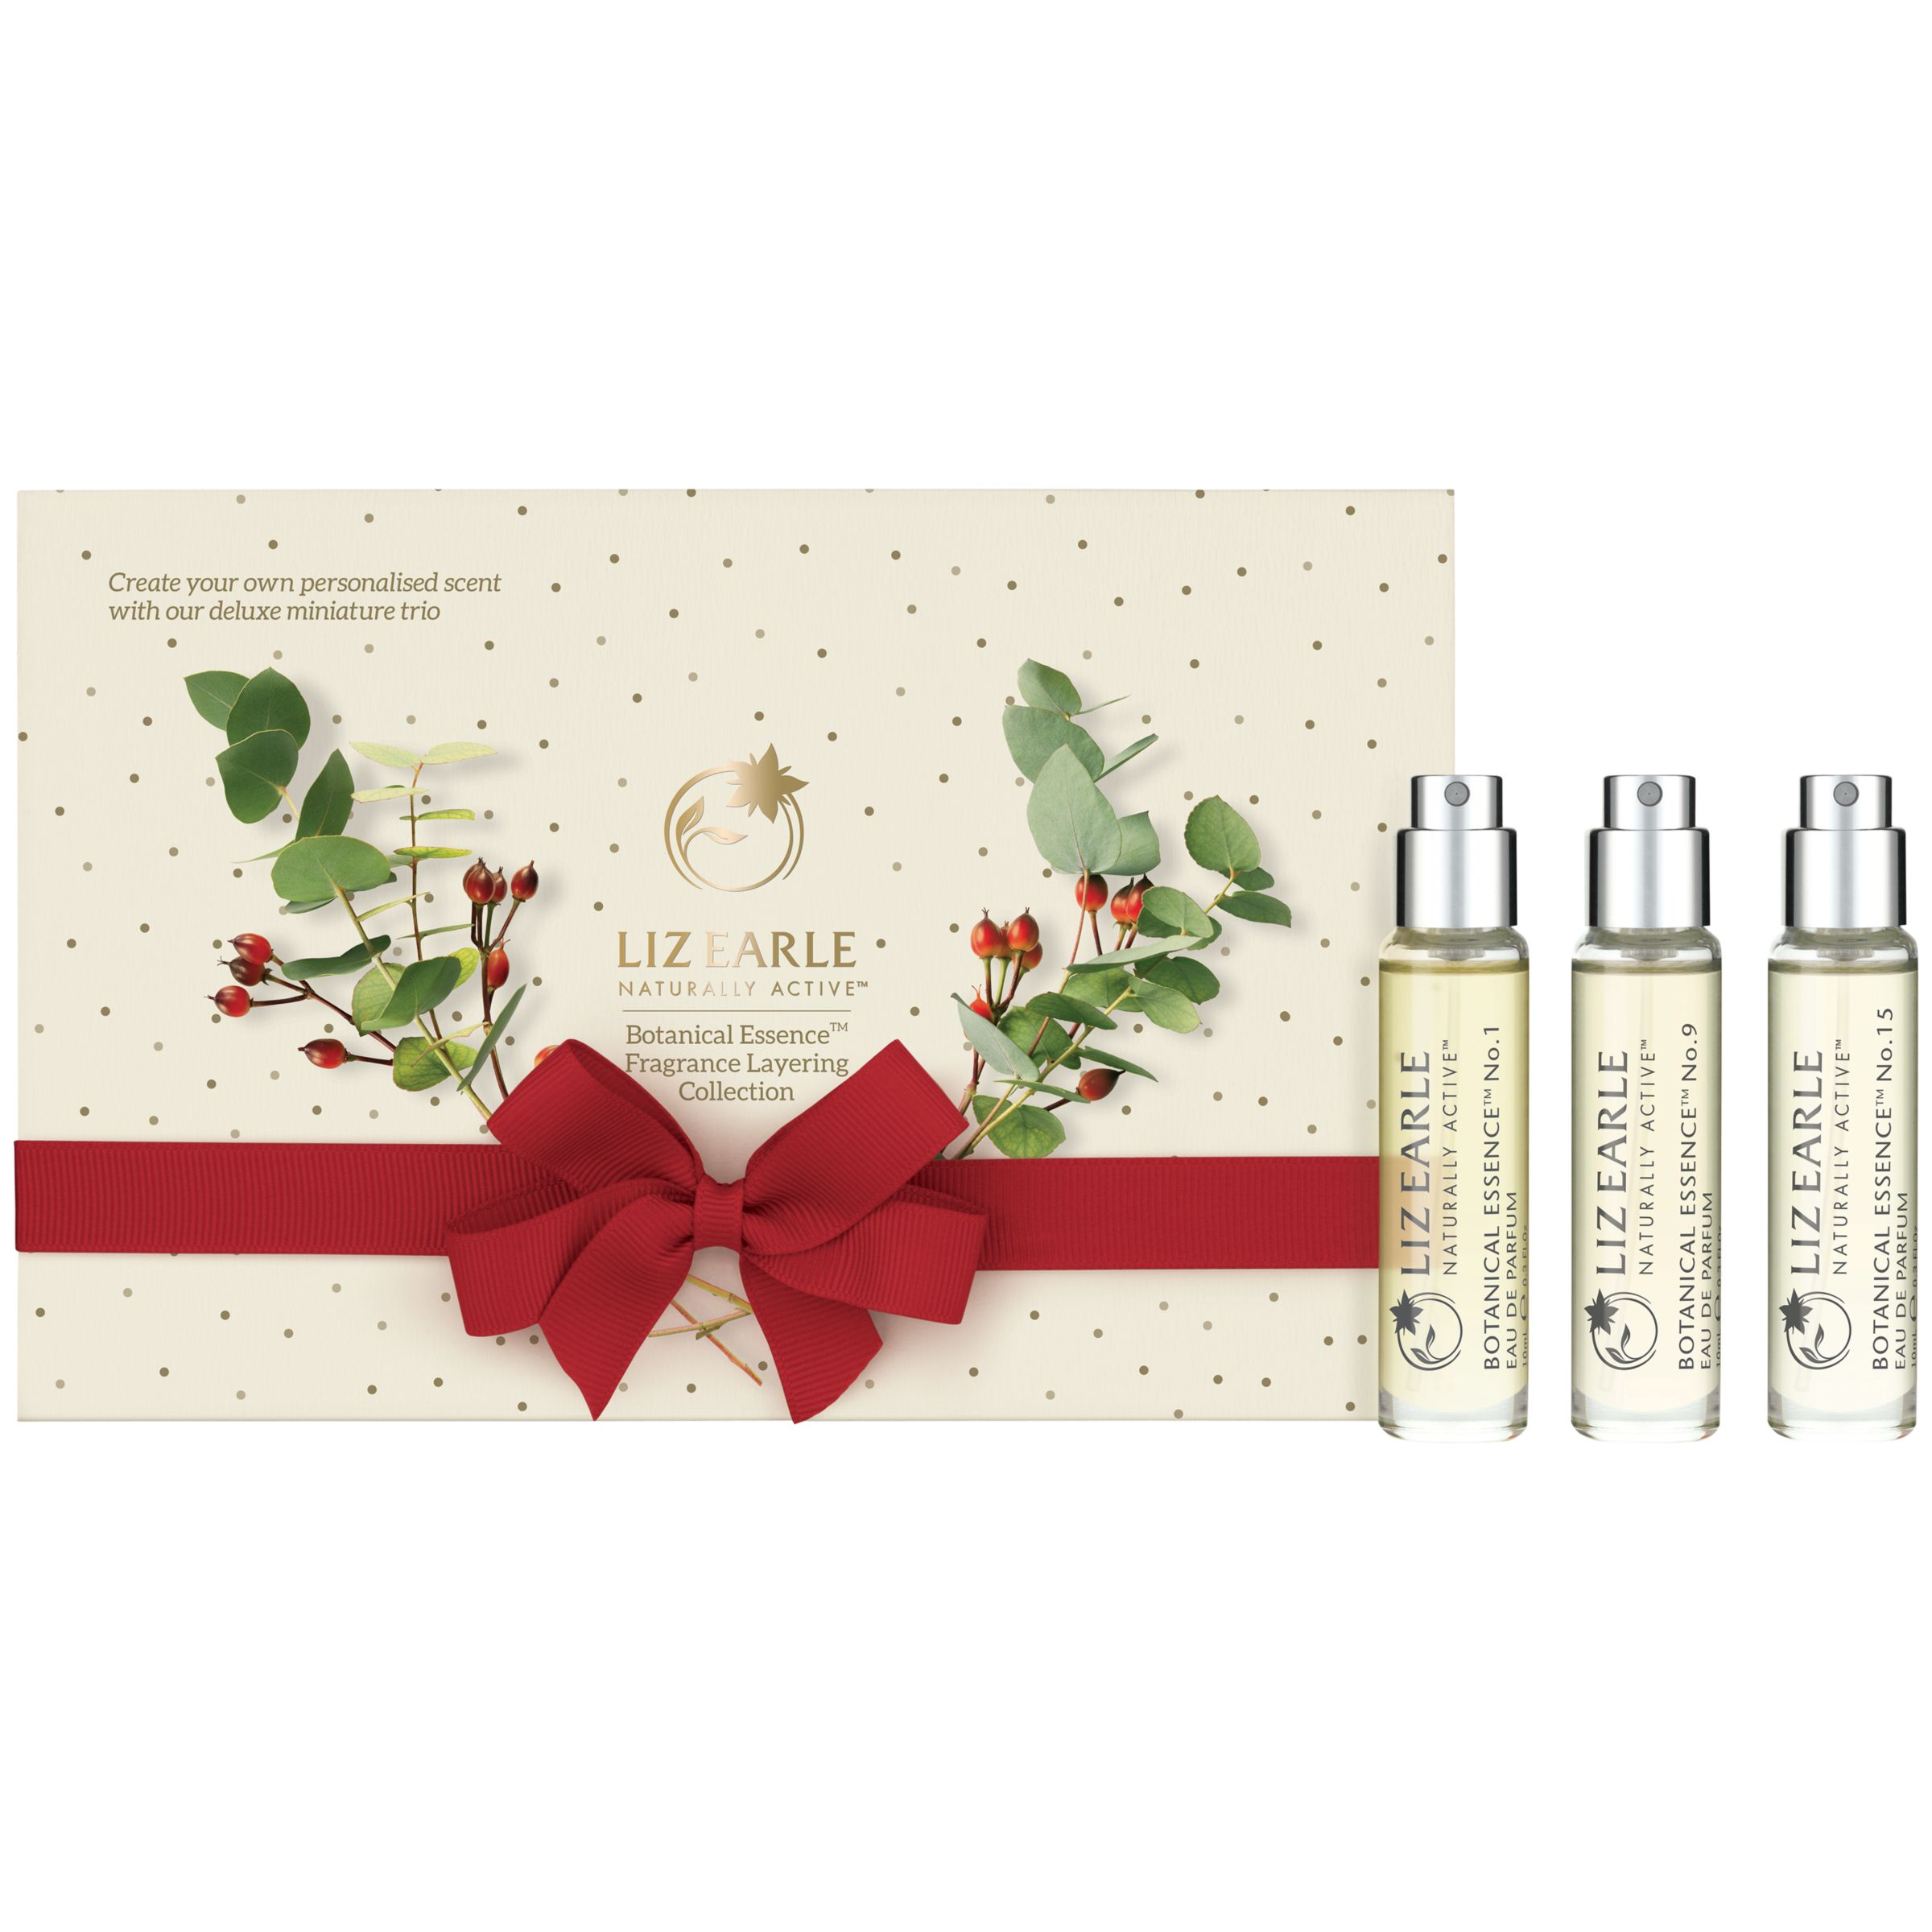 Liz Earle Botanical Essence™ Fragrance Layering Collection